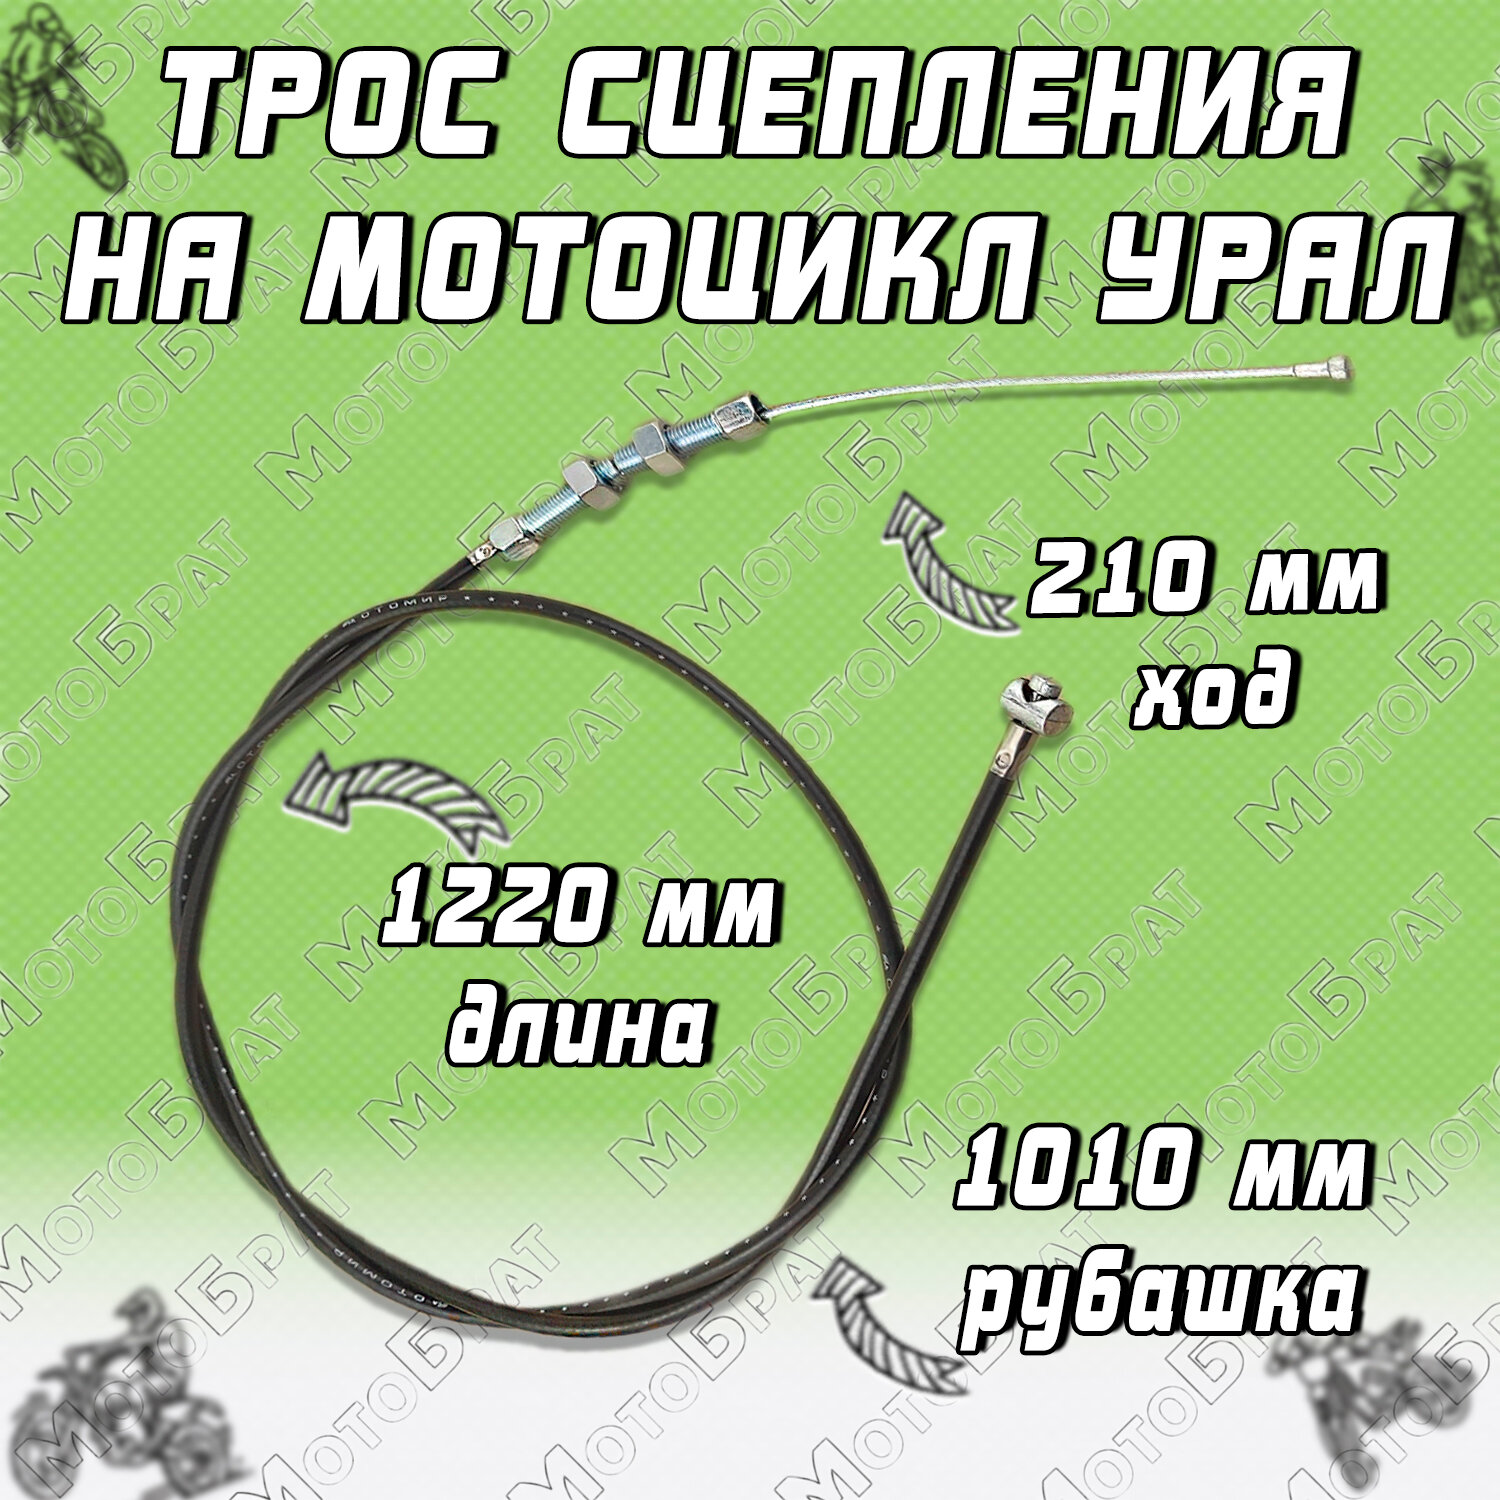 Трос сцепления на Урал L-1220мм